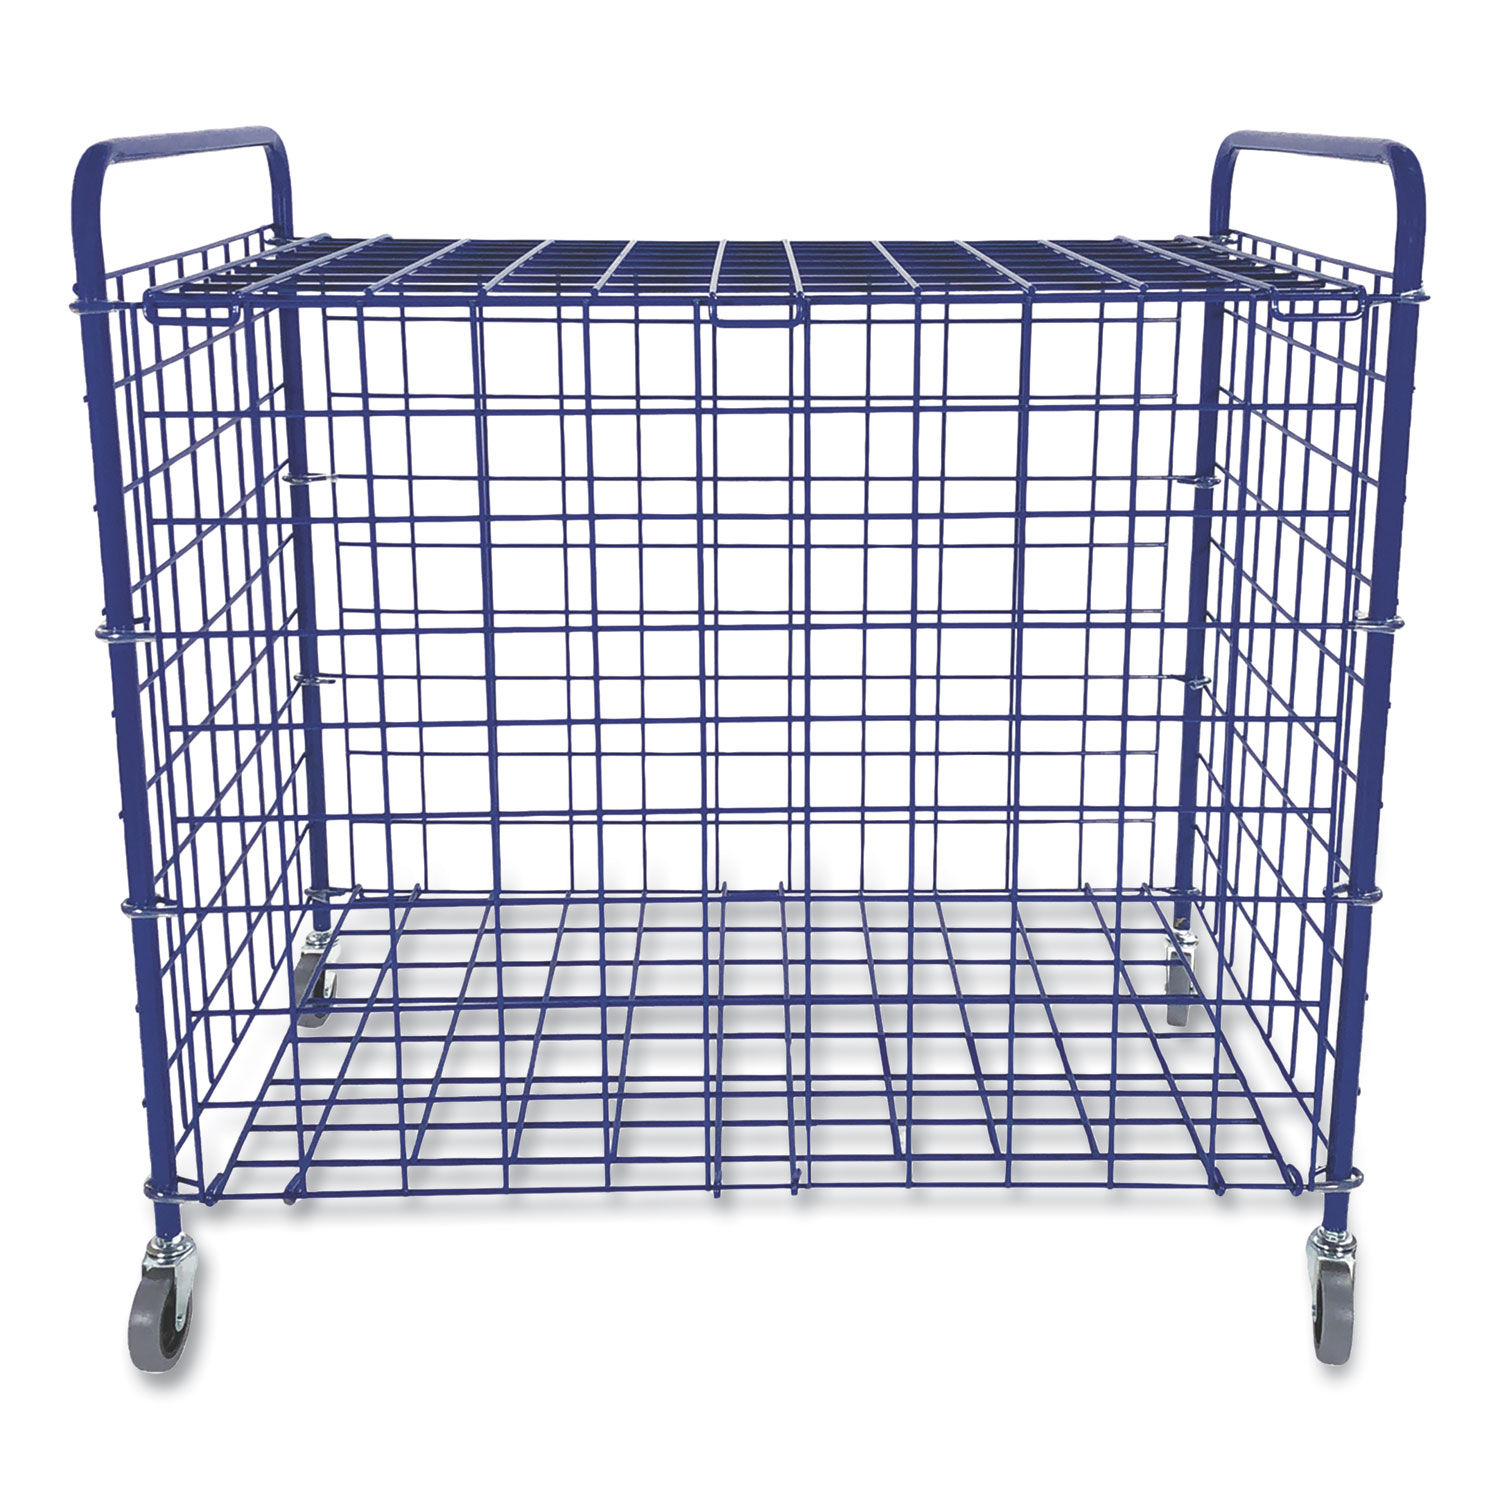 Lockable Ball Storage Cart Fits Approximately 24 Balls, Metal, 37" x 22" x 20", Blue